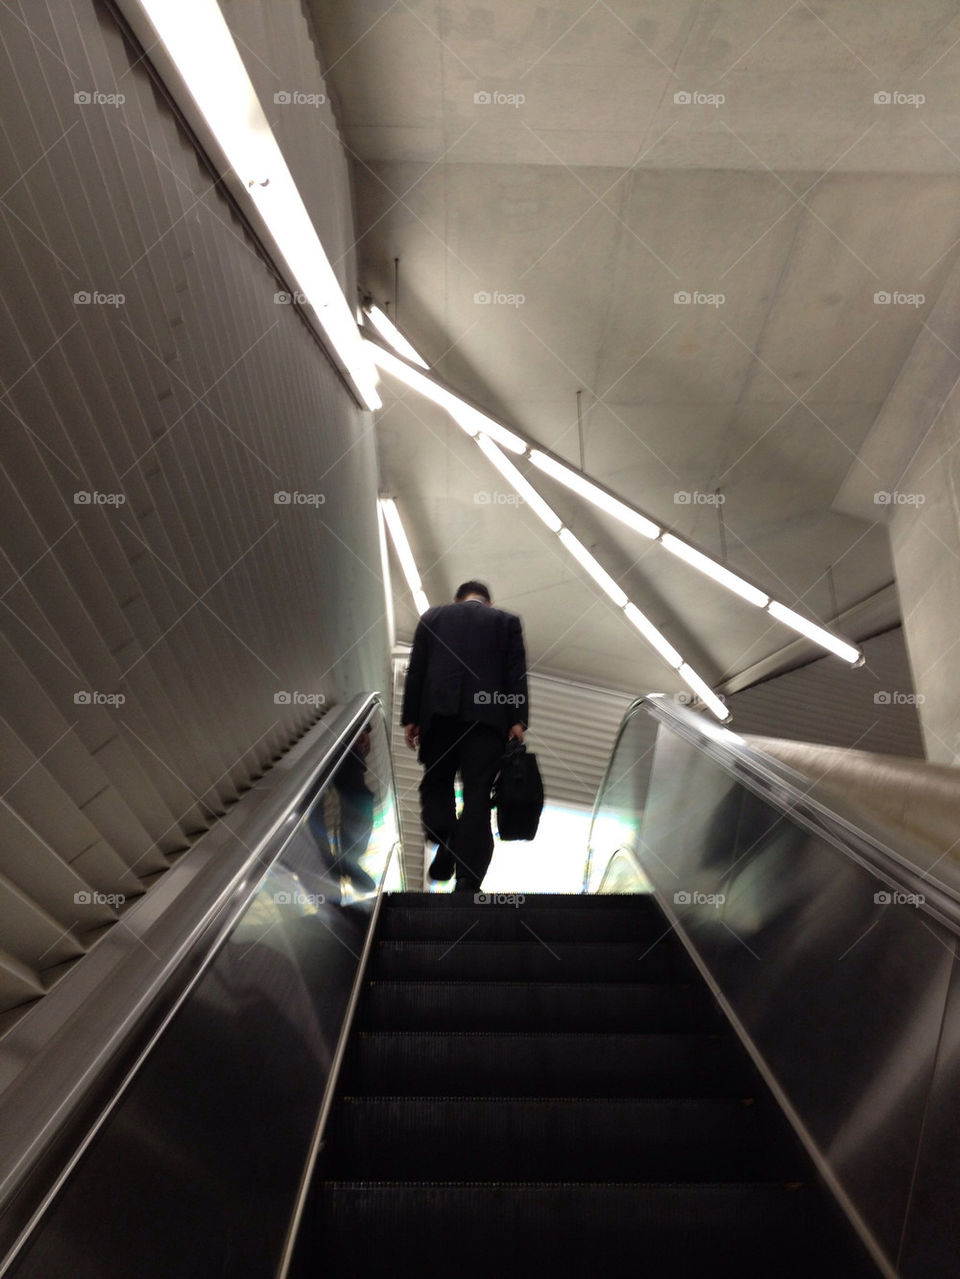 man subway escalator japan by jonk